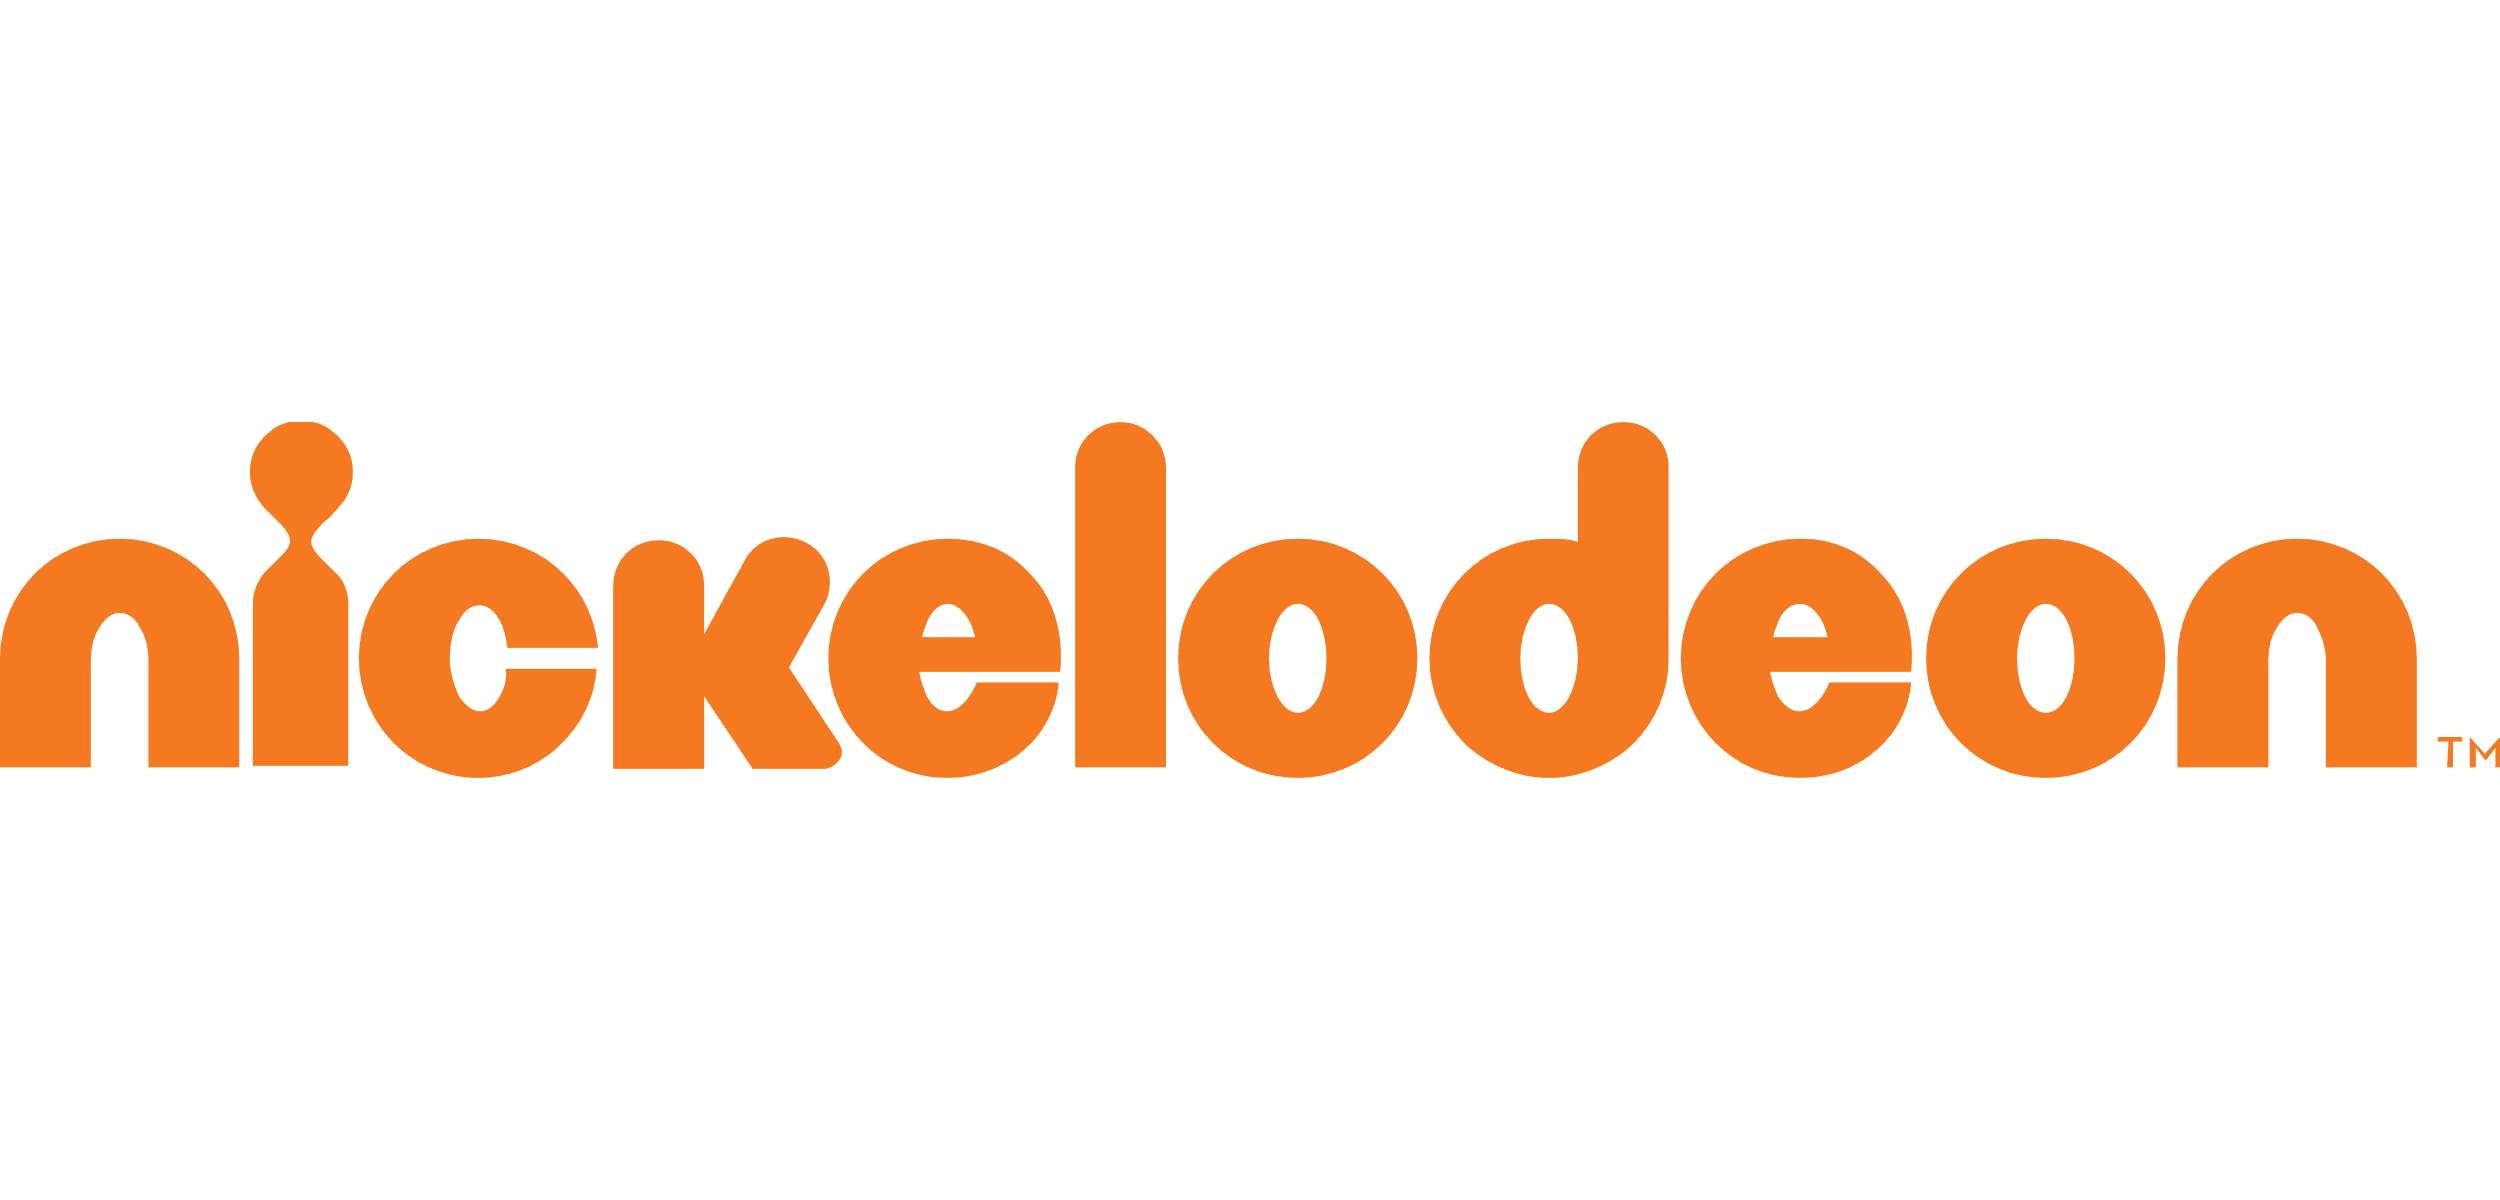 5. Nickelodeon (Nivel 3)